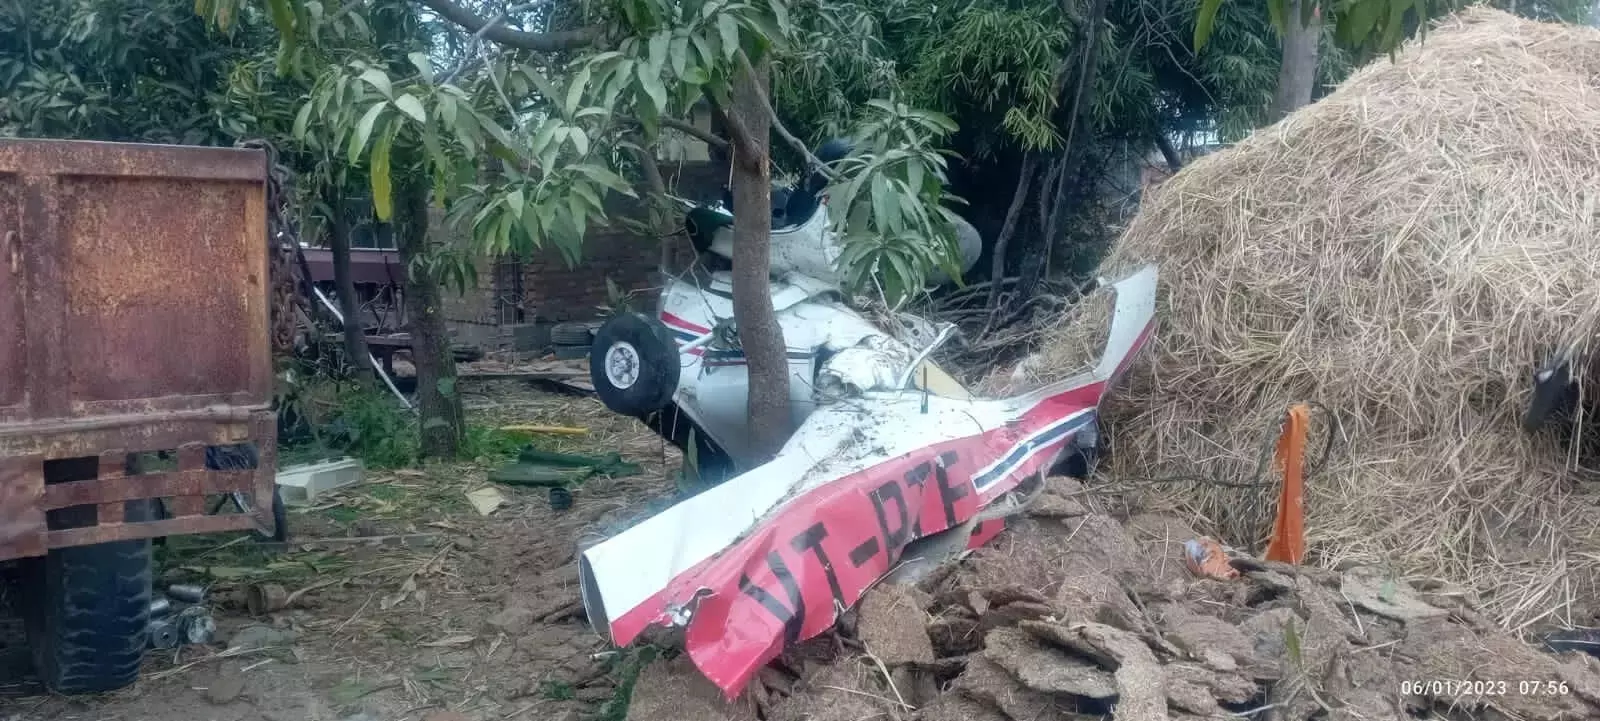 Madhya Pradesh: Trainer aircraft crashes in Rewa district, pilot killed